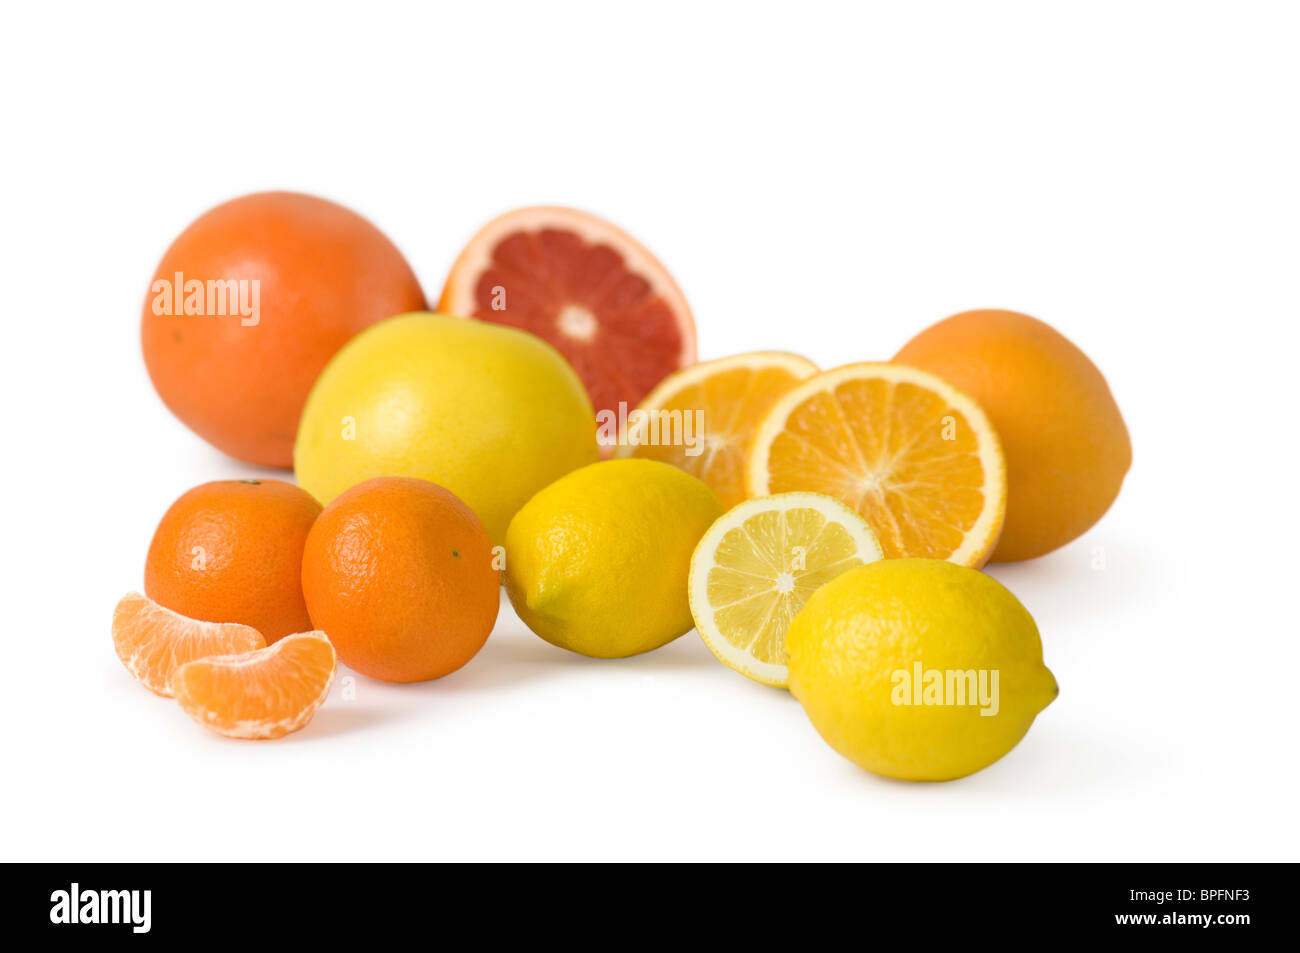 Oranges, lemons and grapefruit. Stock Photo